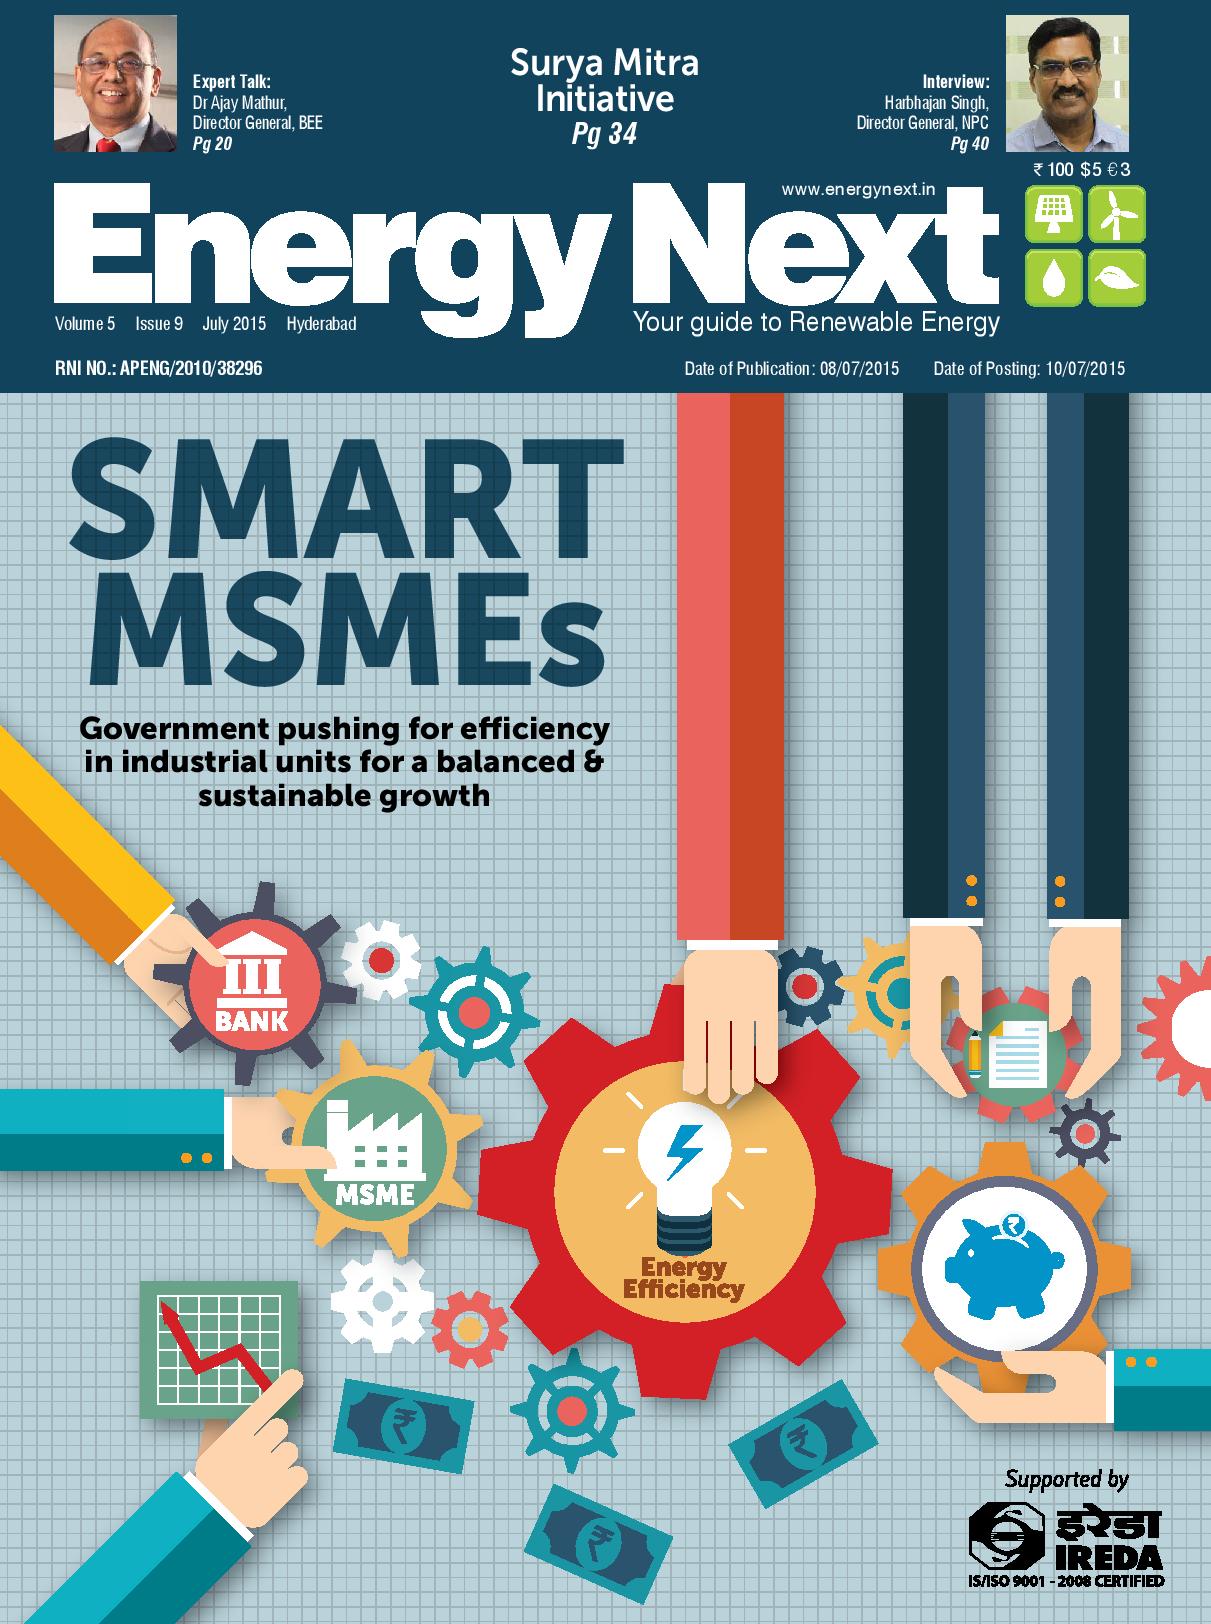 EnergyNext Vol 05 issue 9 Jul 2015